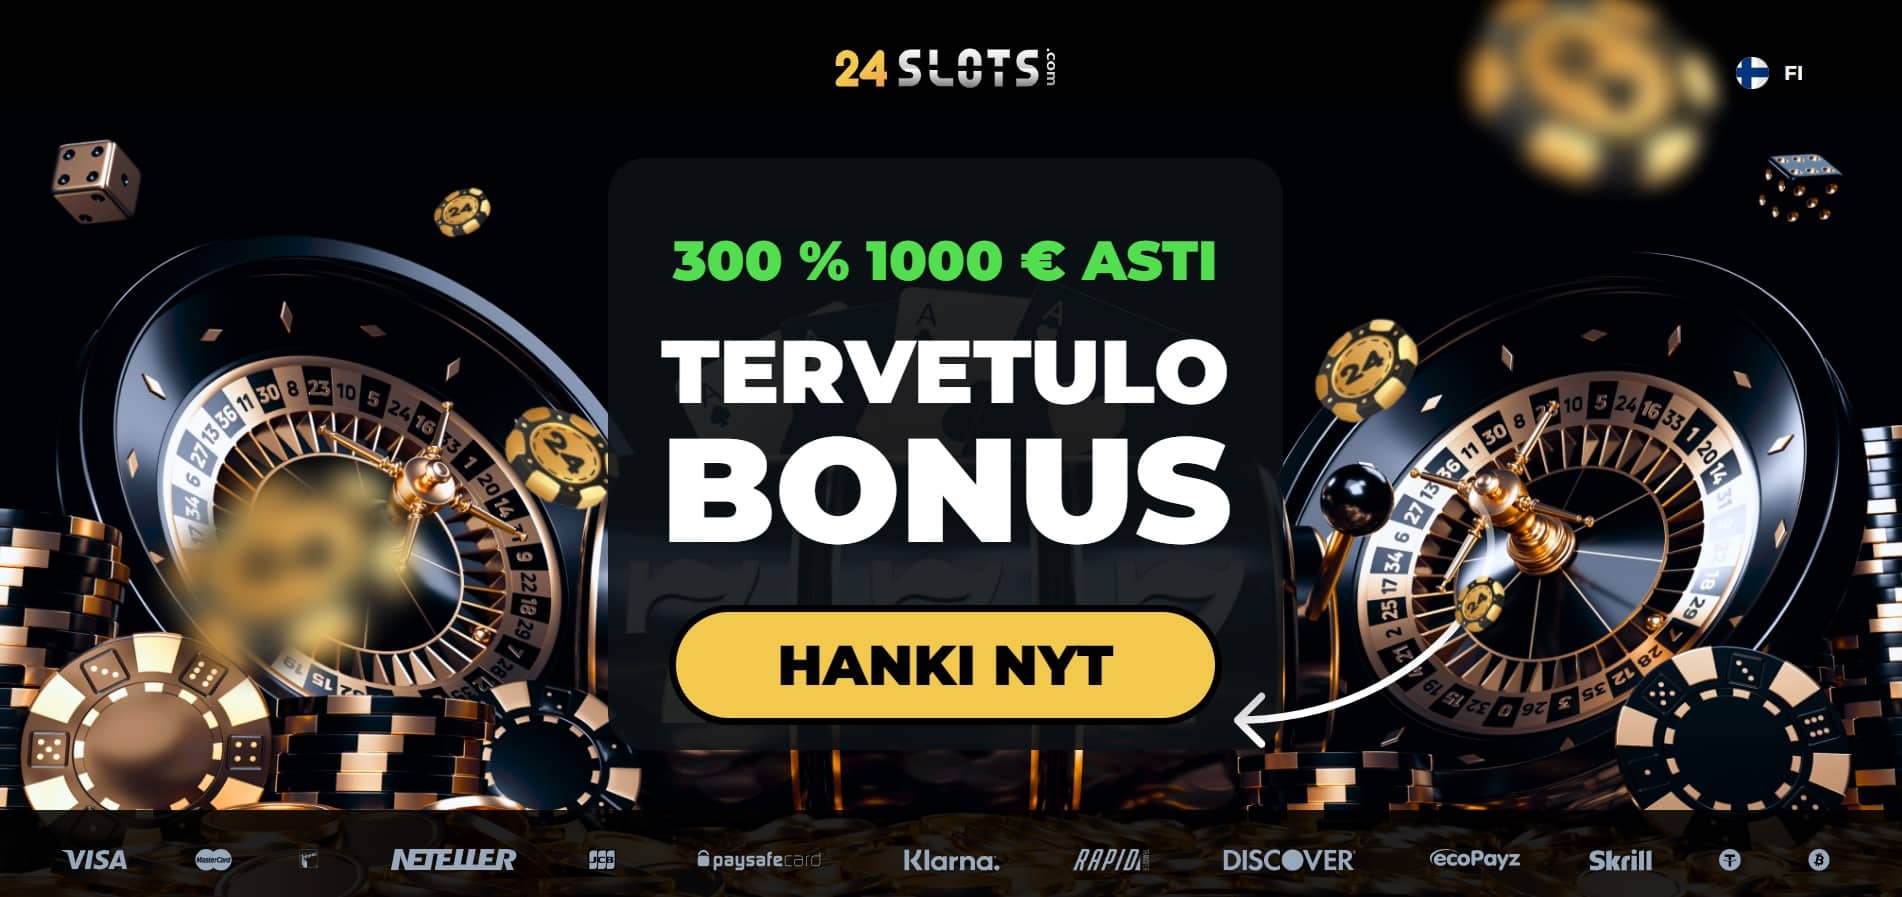 24 slots Suomi